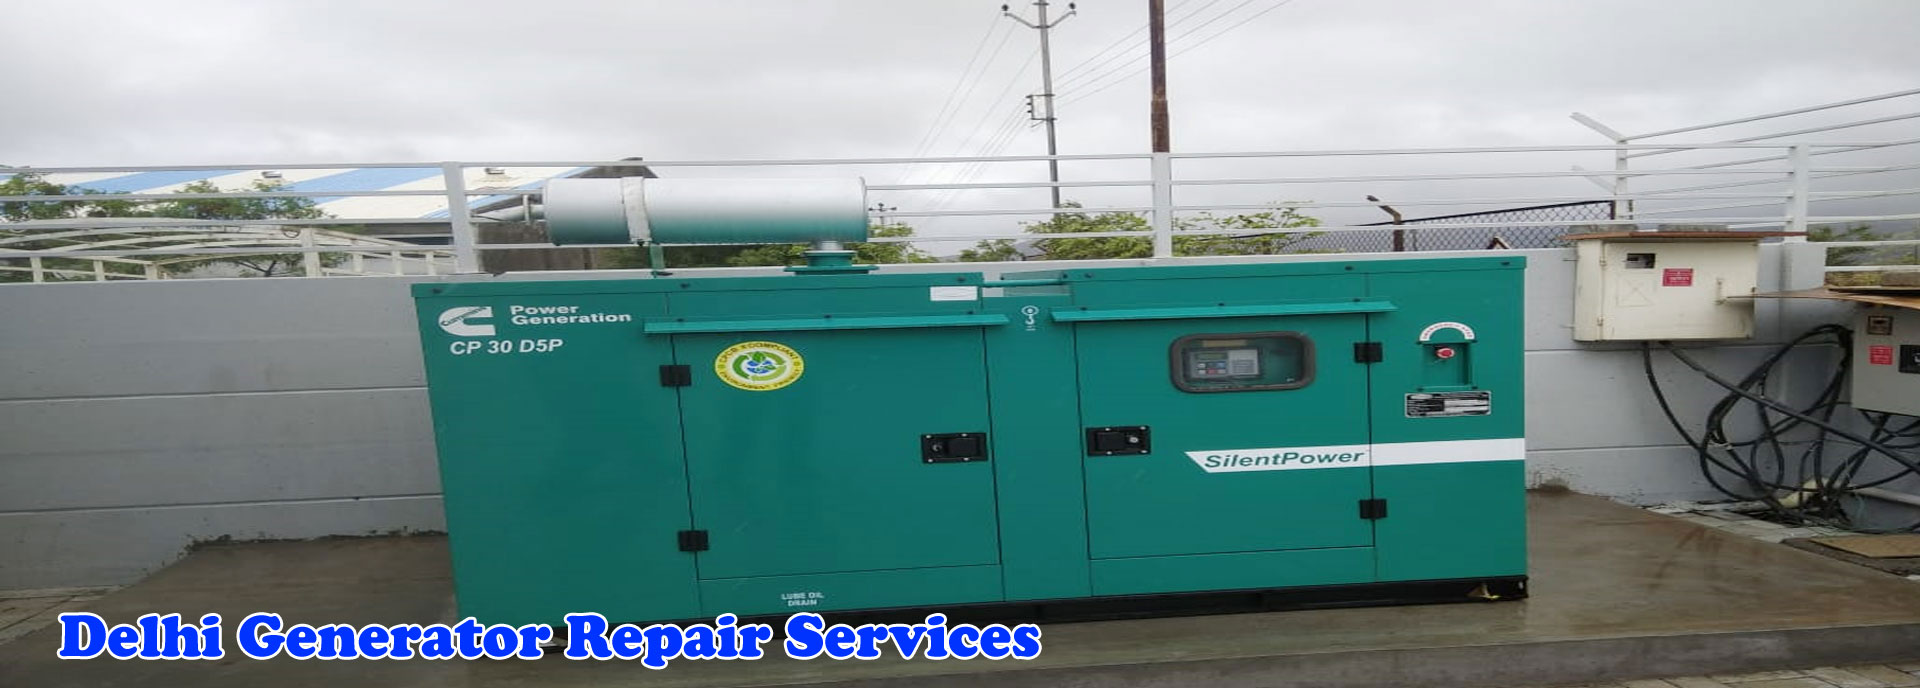 Delhi Generator Repair Services